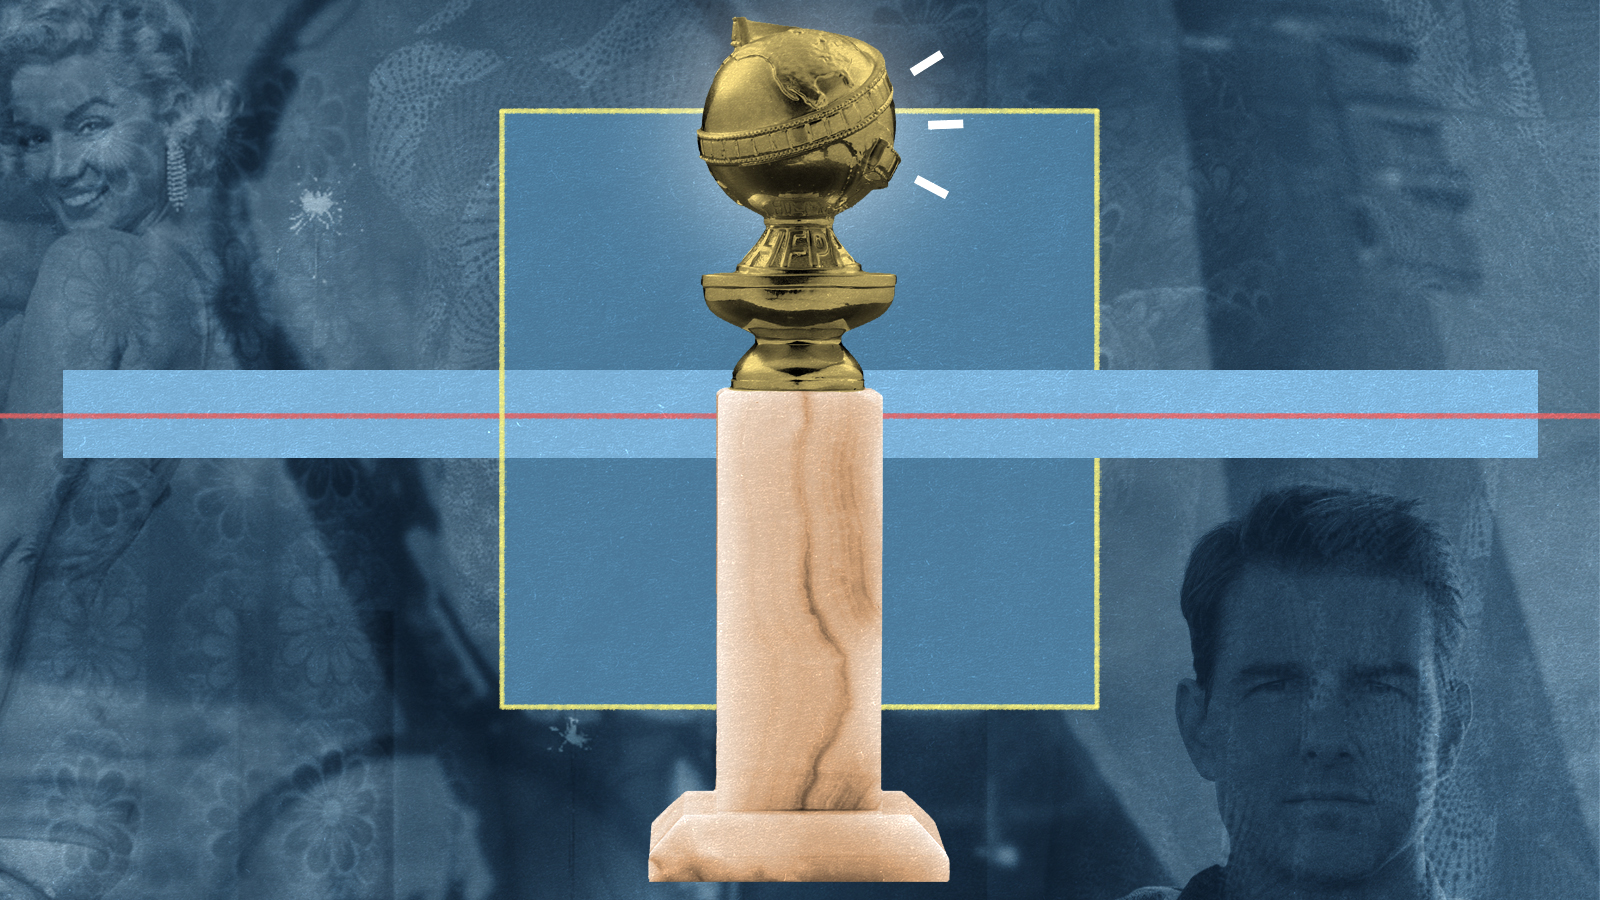 The Golden Globes statuette.